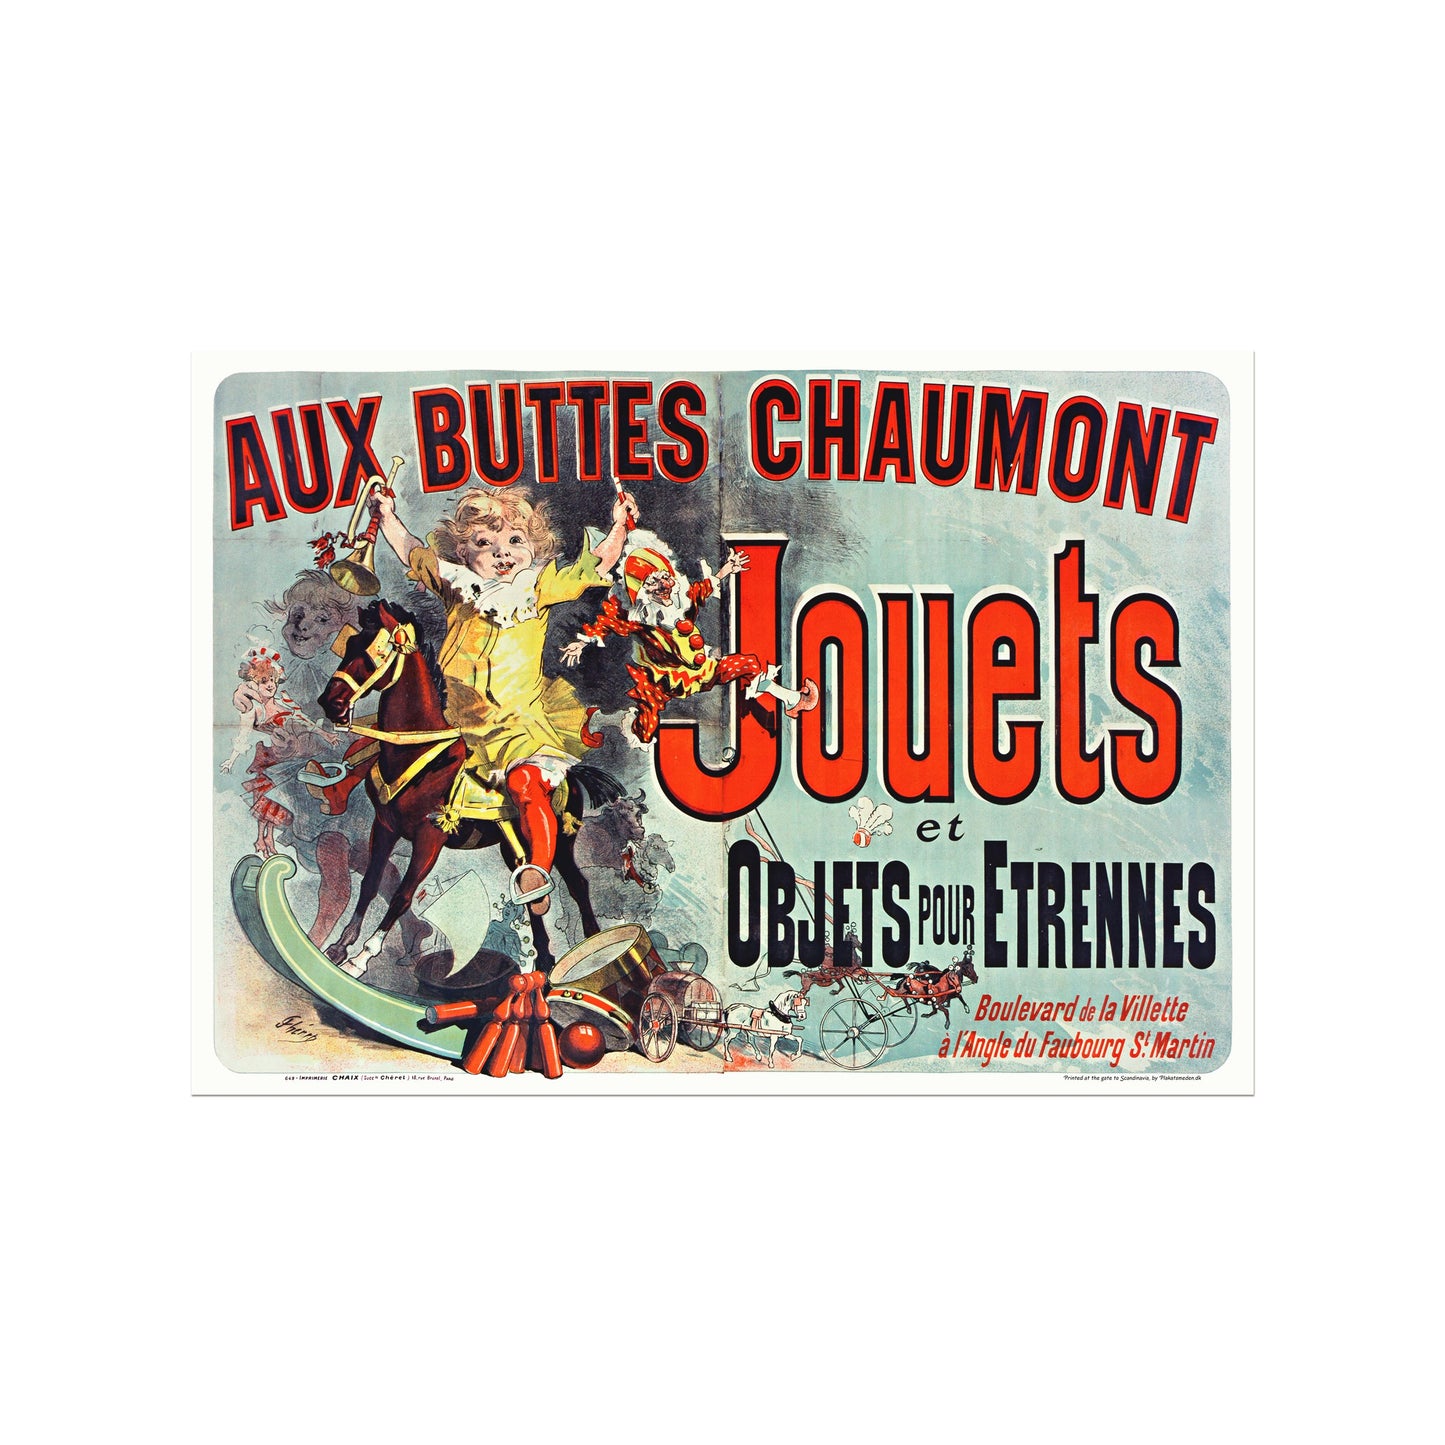 Old toy advertisement - Aux Buttes Chaumont